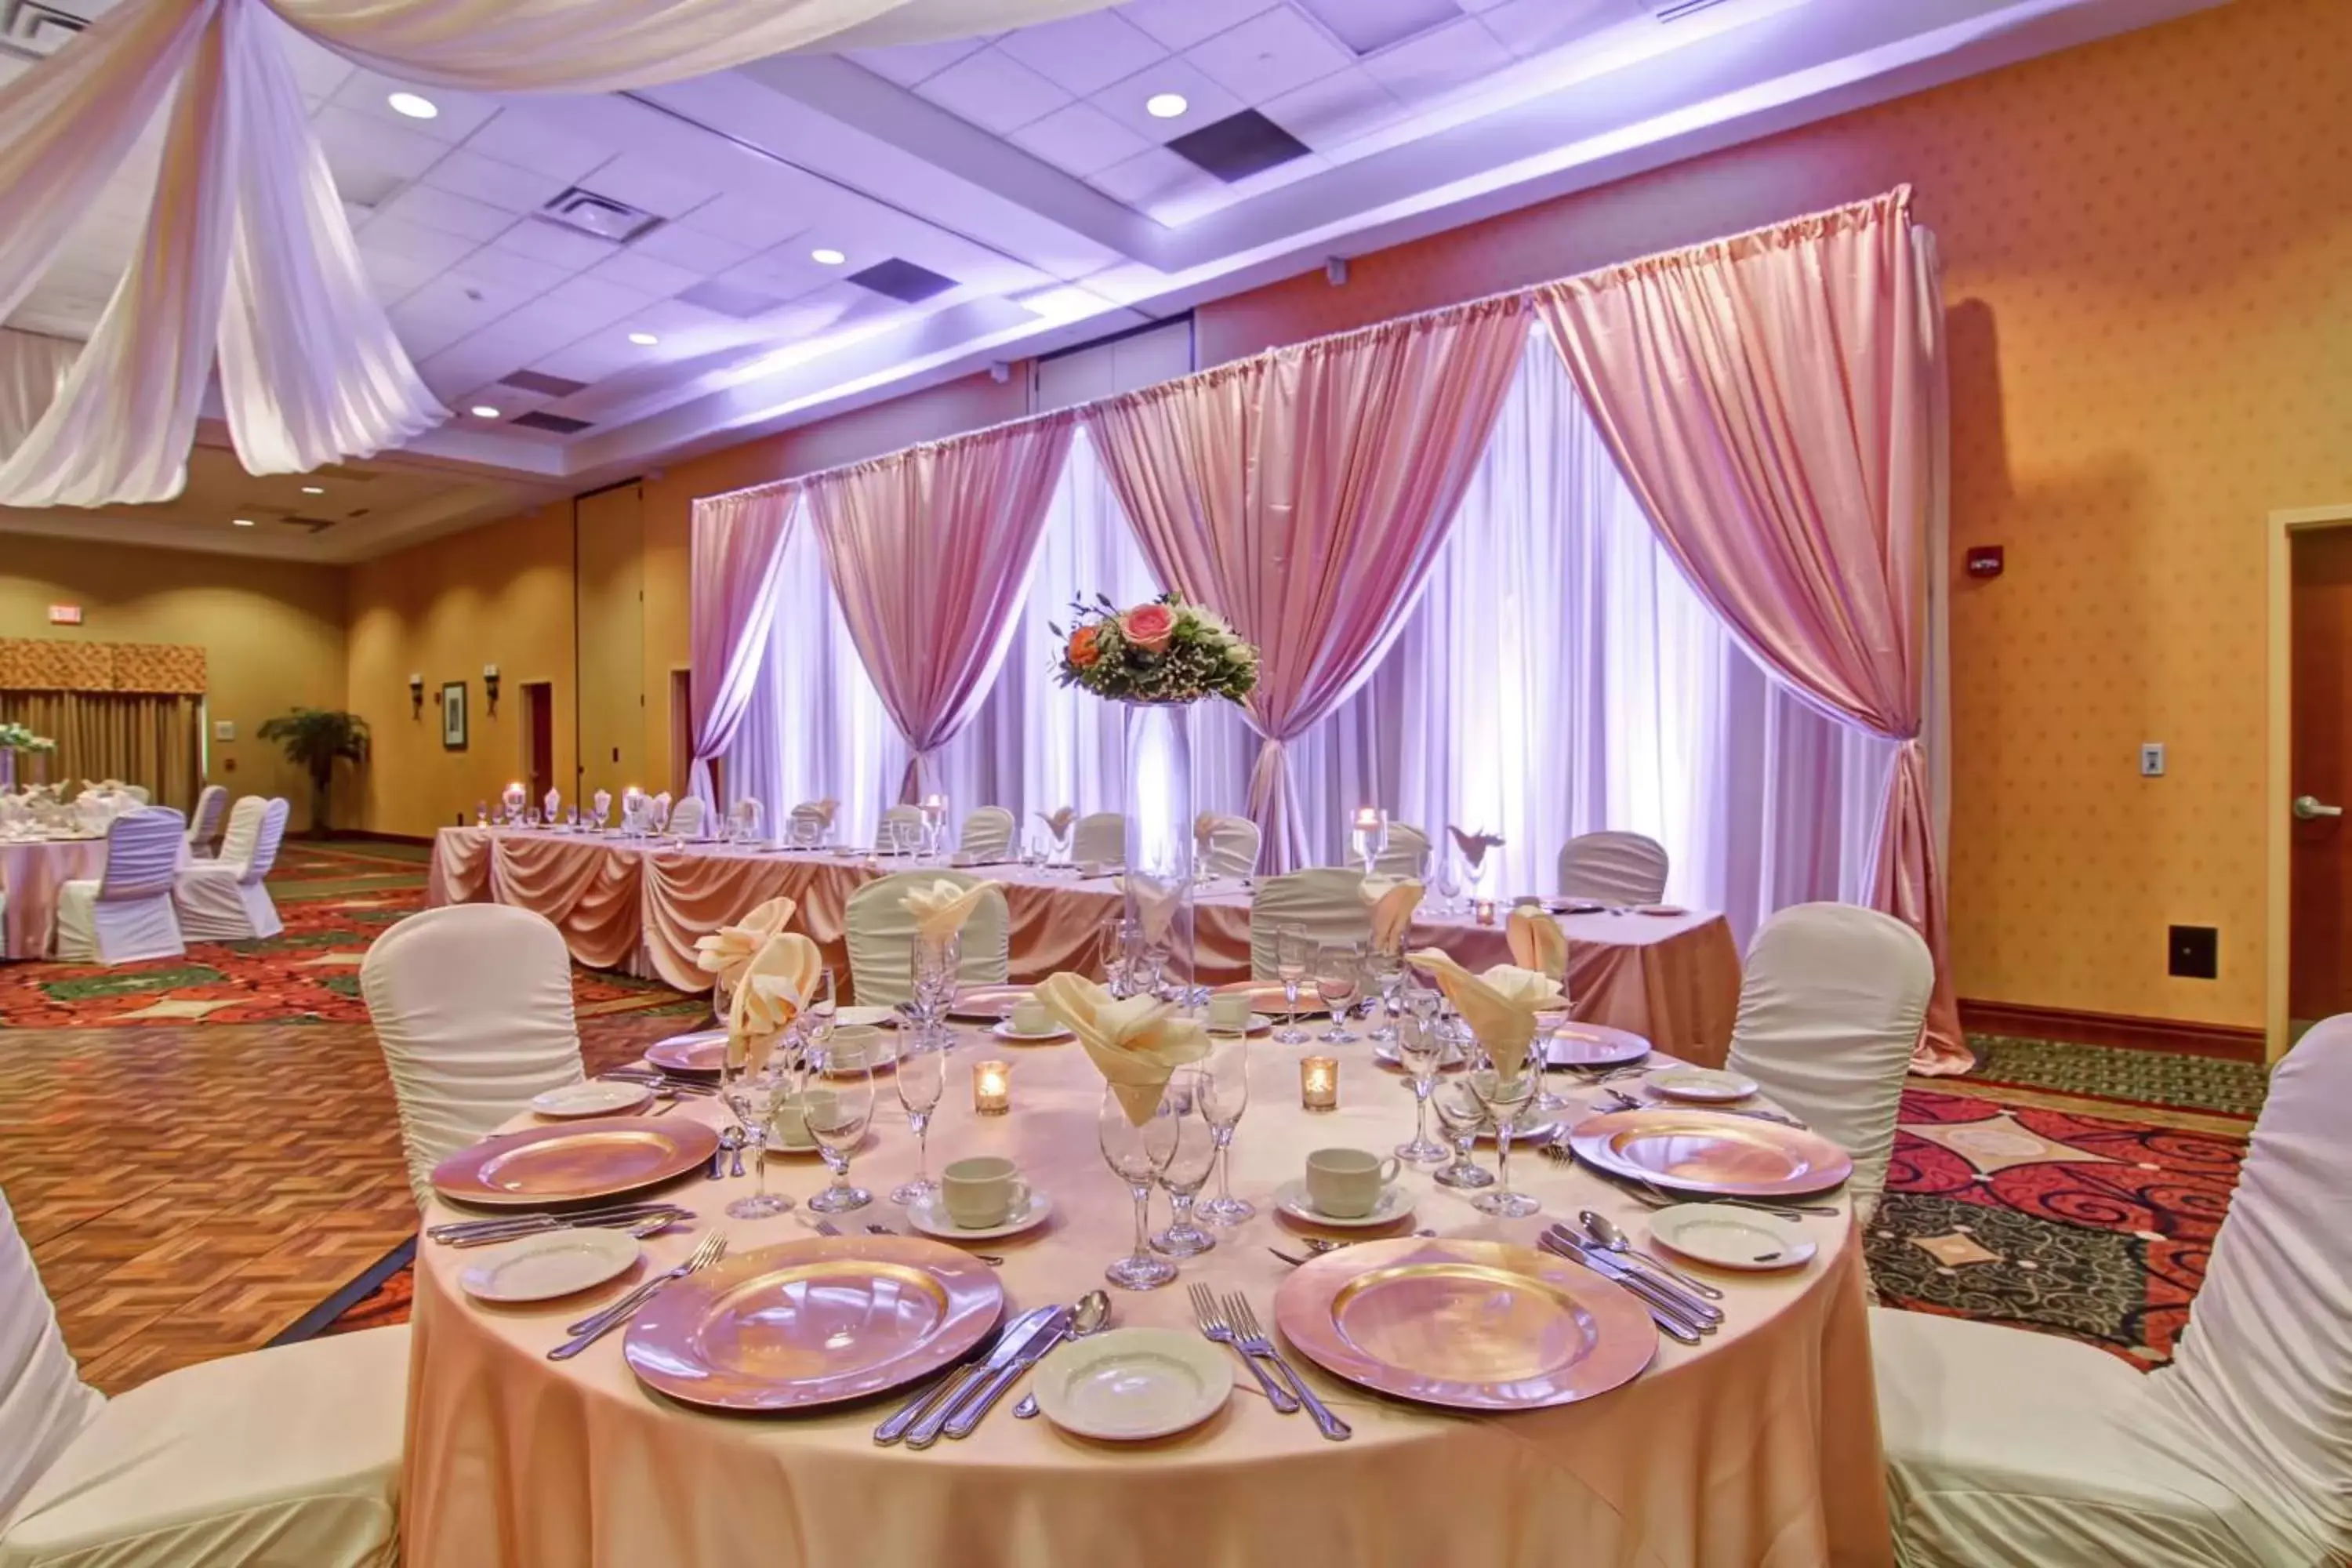 Meeting/conference room, Banquet Facilities in Hilton Garden Inn Ottawa Airport